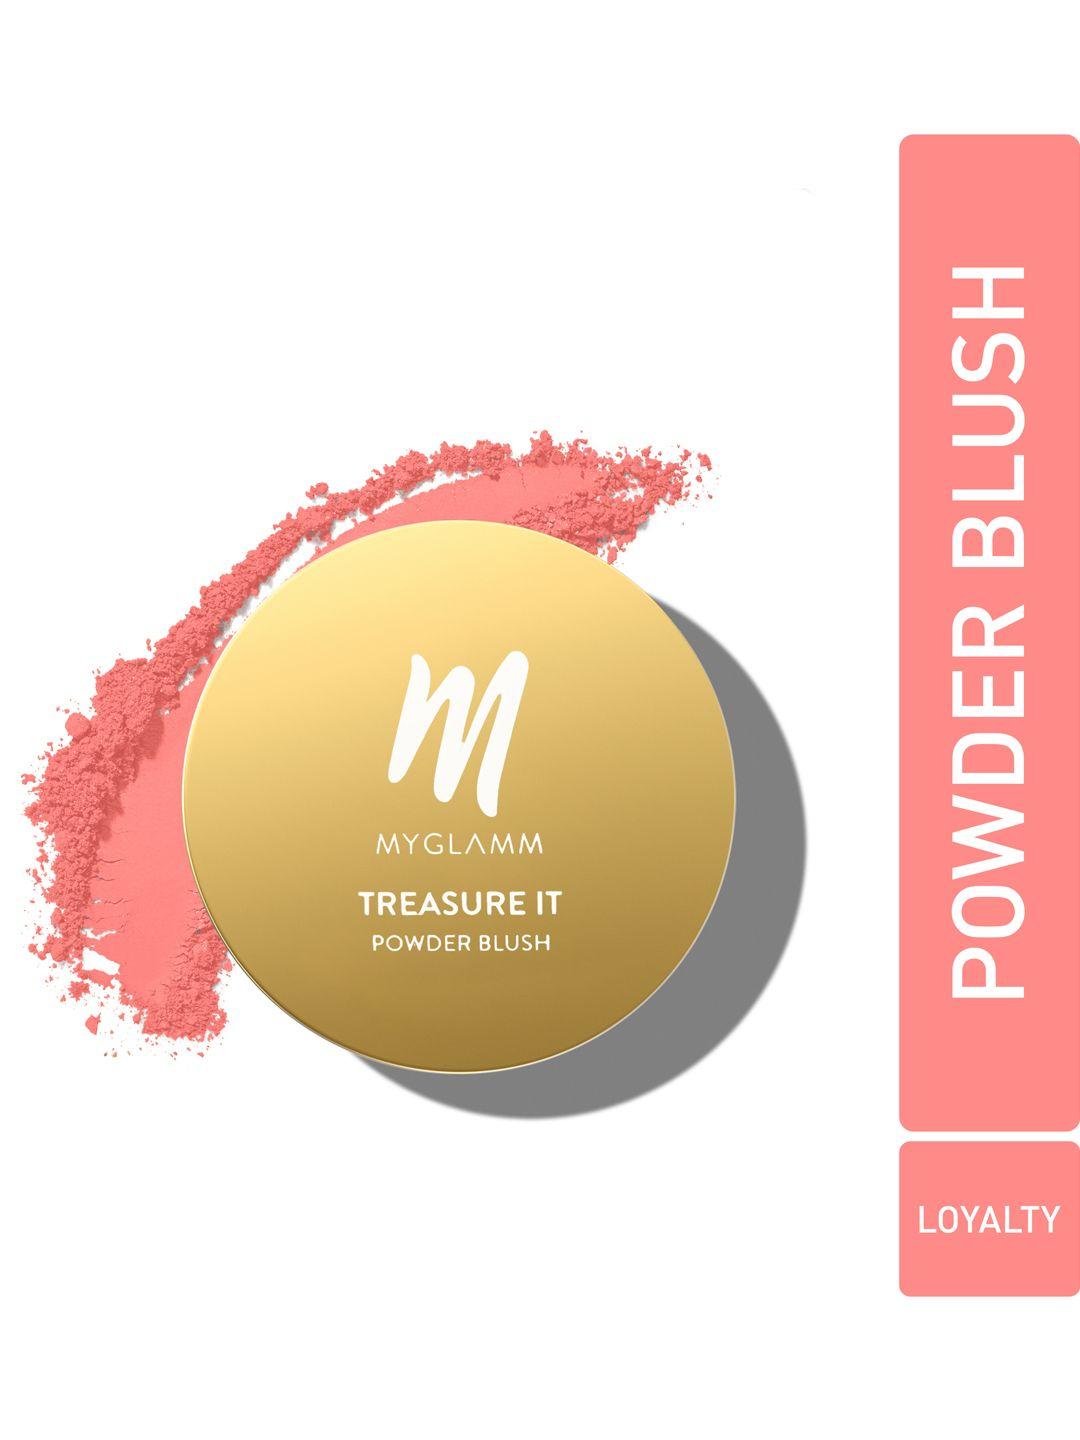 myglamm treasure it lightweight & buildable powder matte blush with vitamin e 4g - loyalty